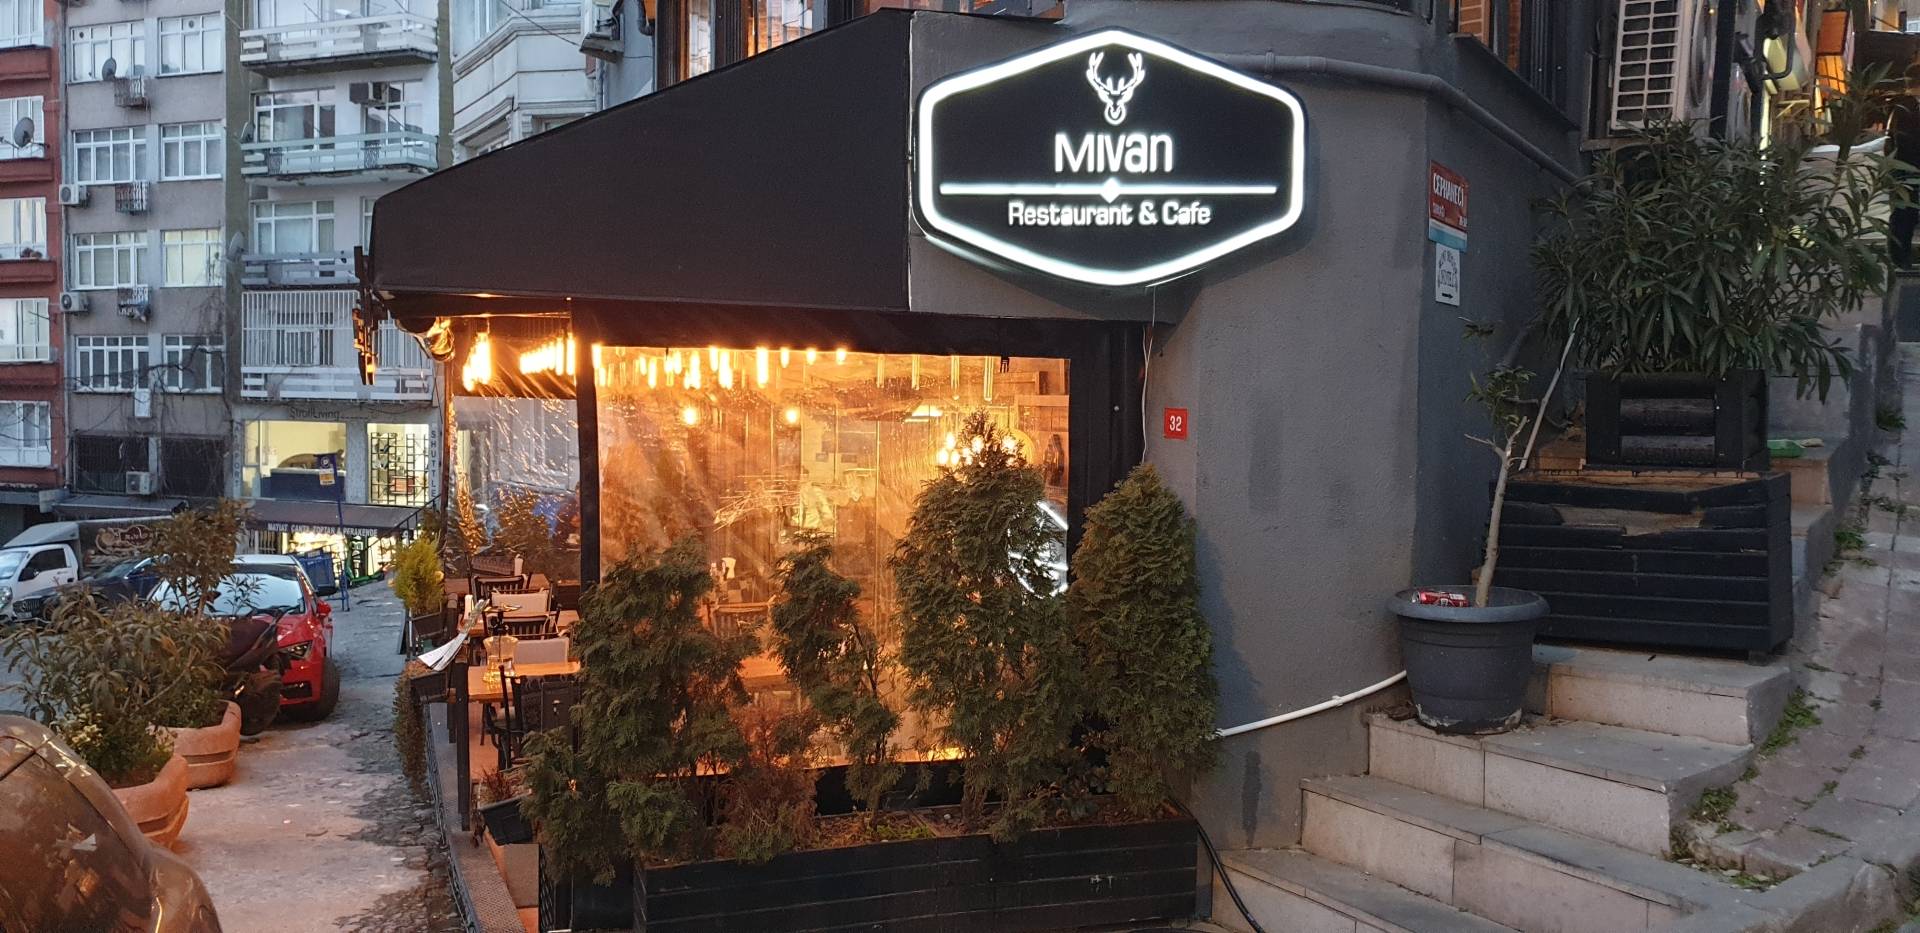 Mivan Restaurant Cafe